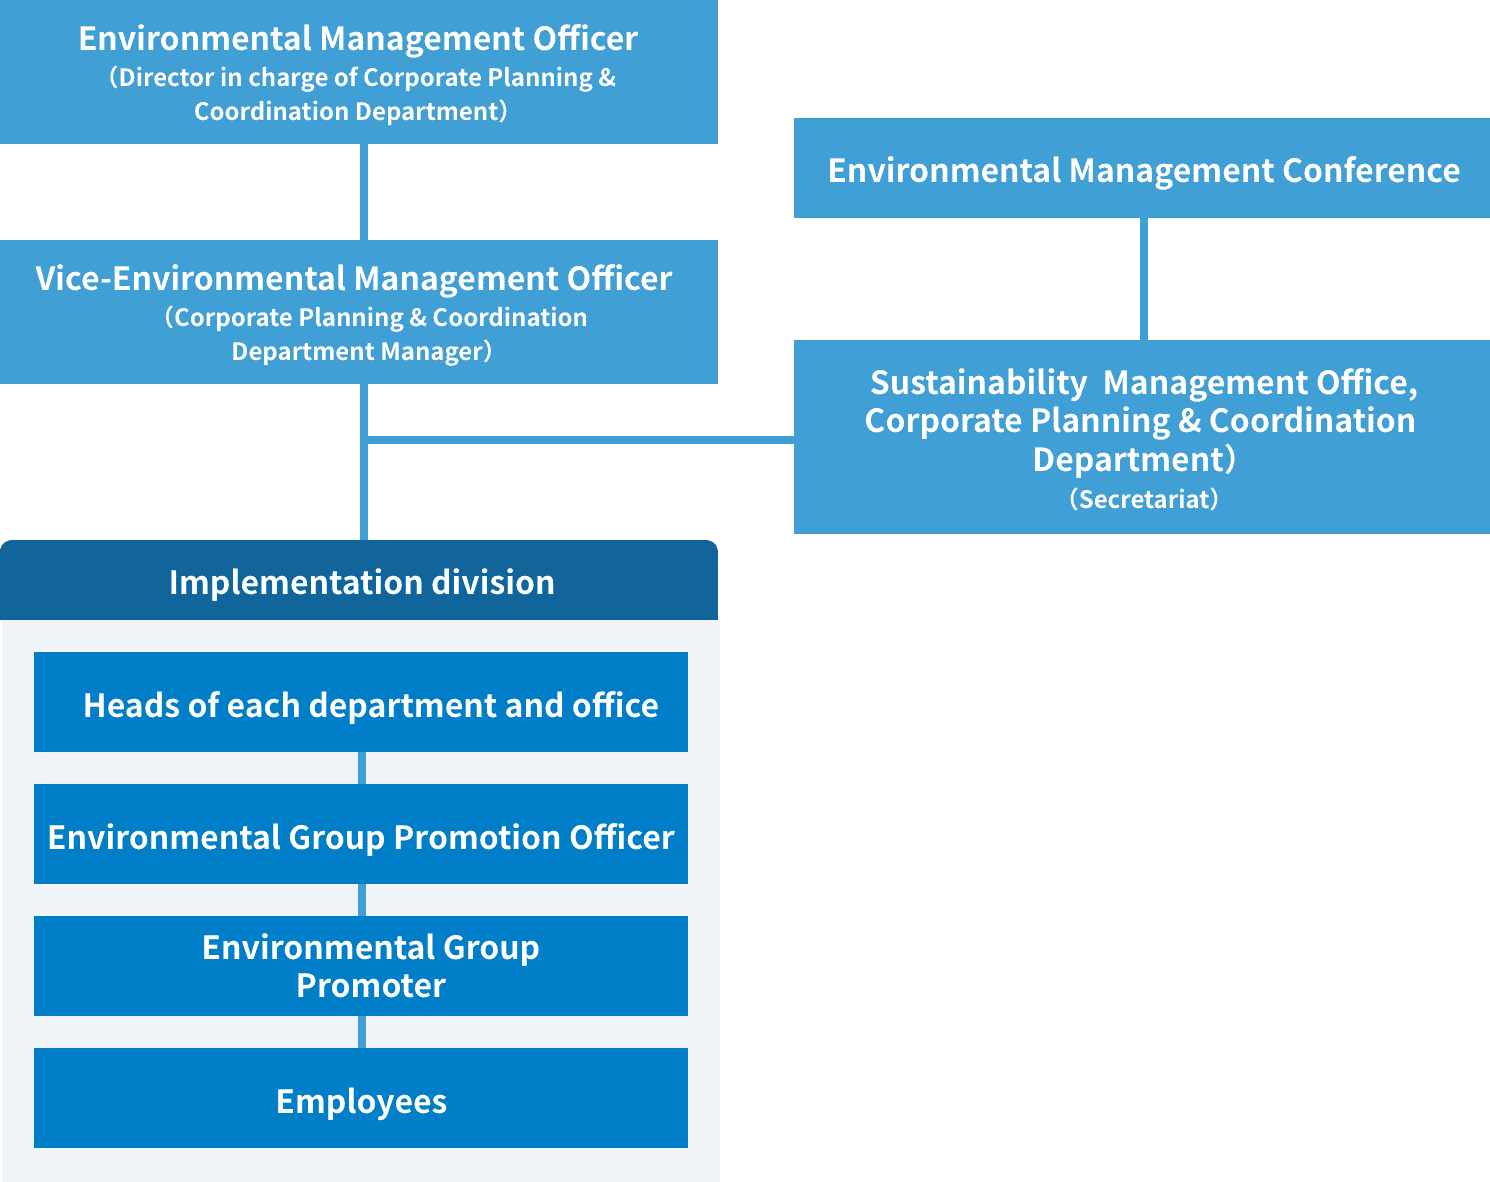 Environmental Management Structure